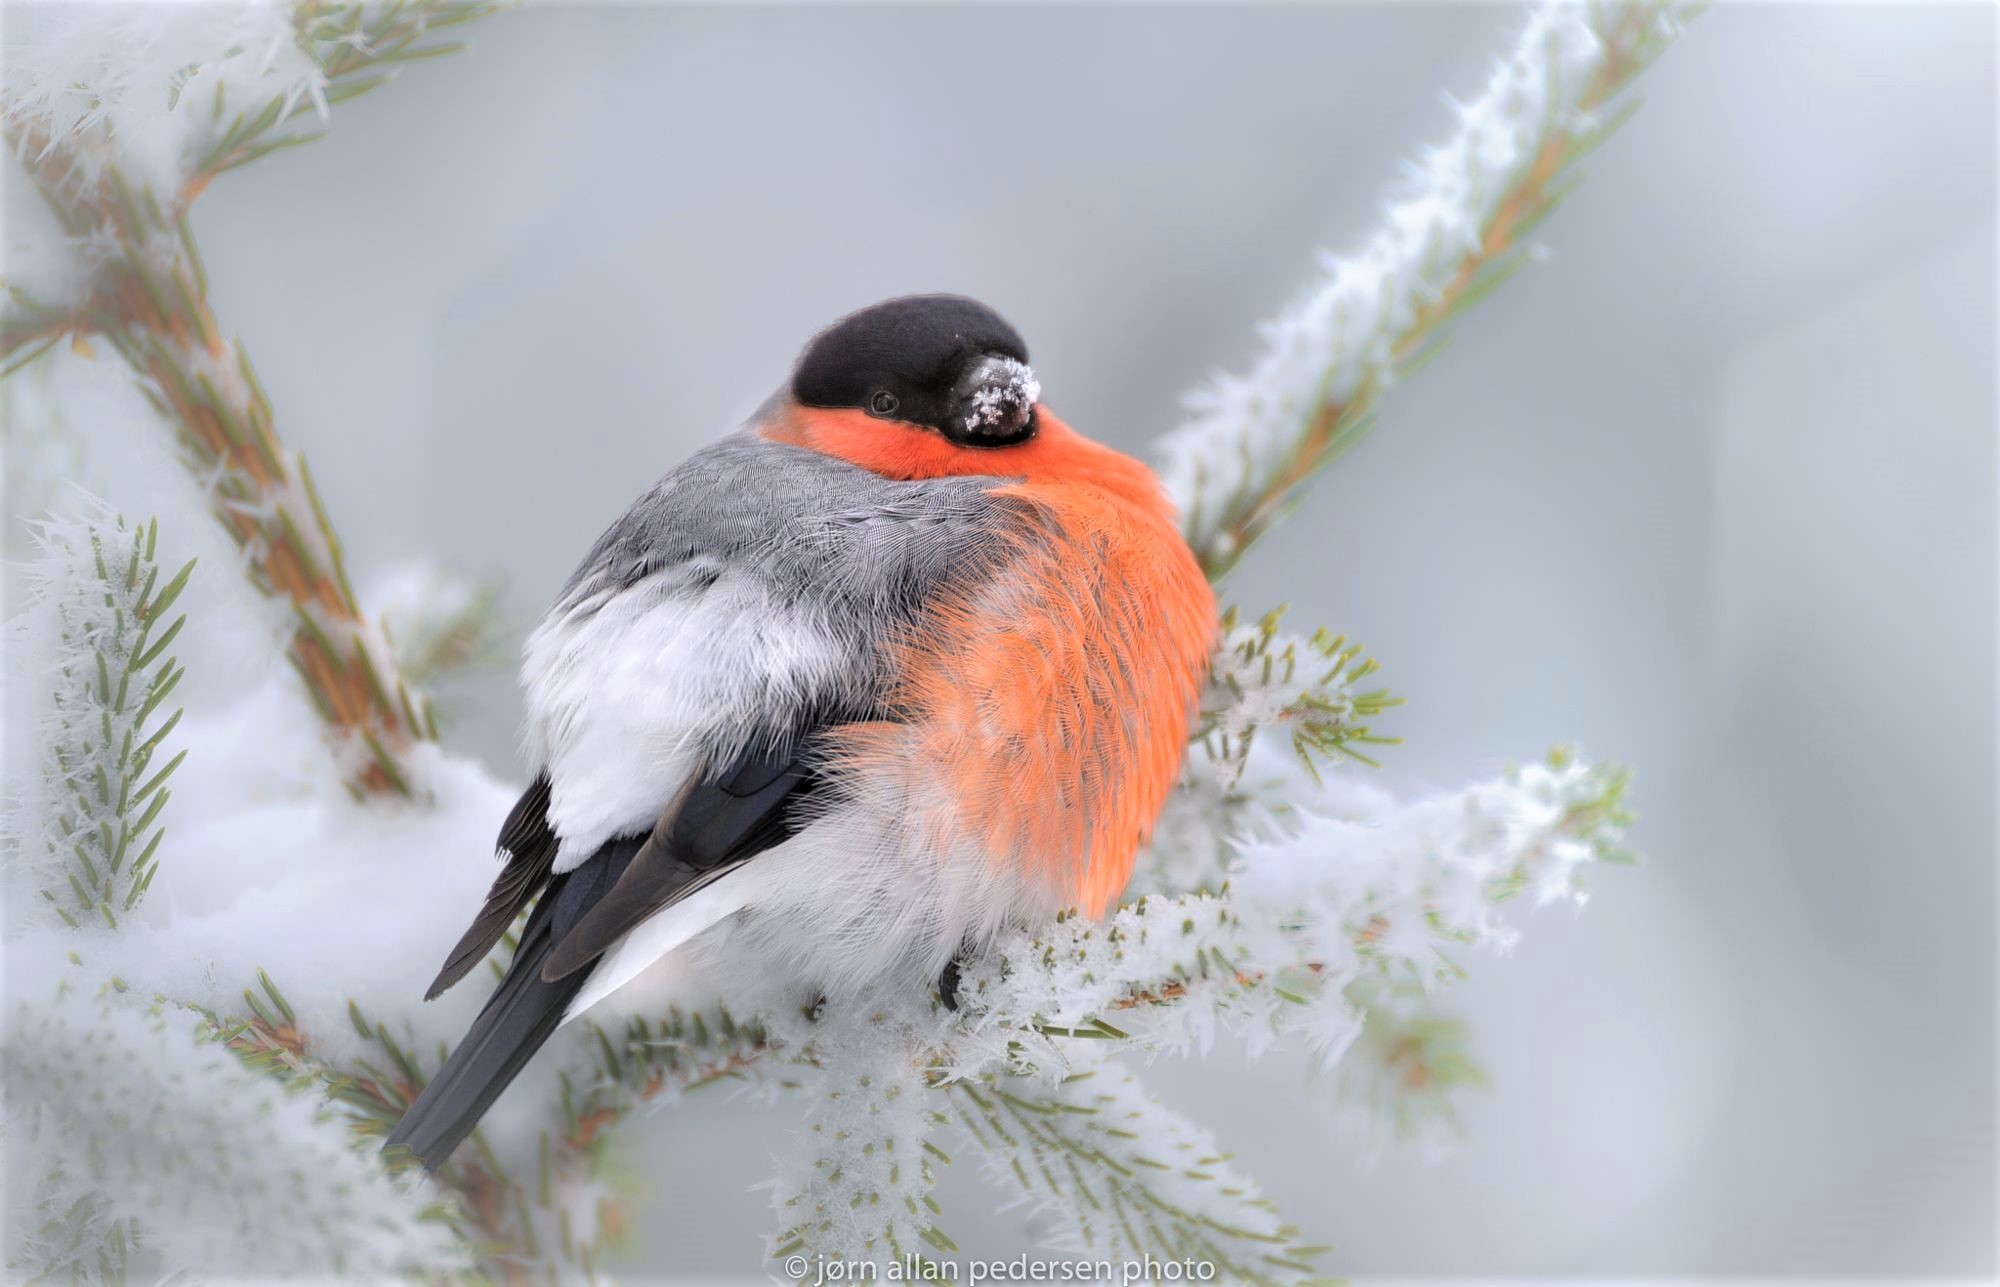 Bullfinch on Snowy Winter Branch by Jørn Allan Pedersen